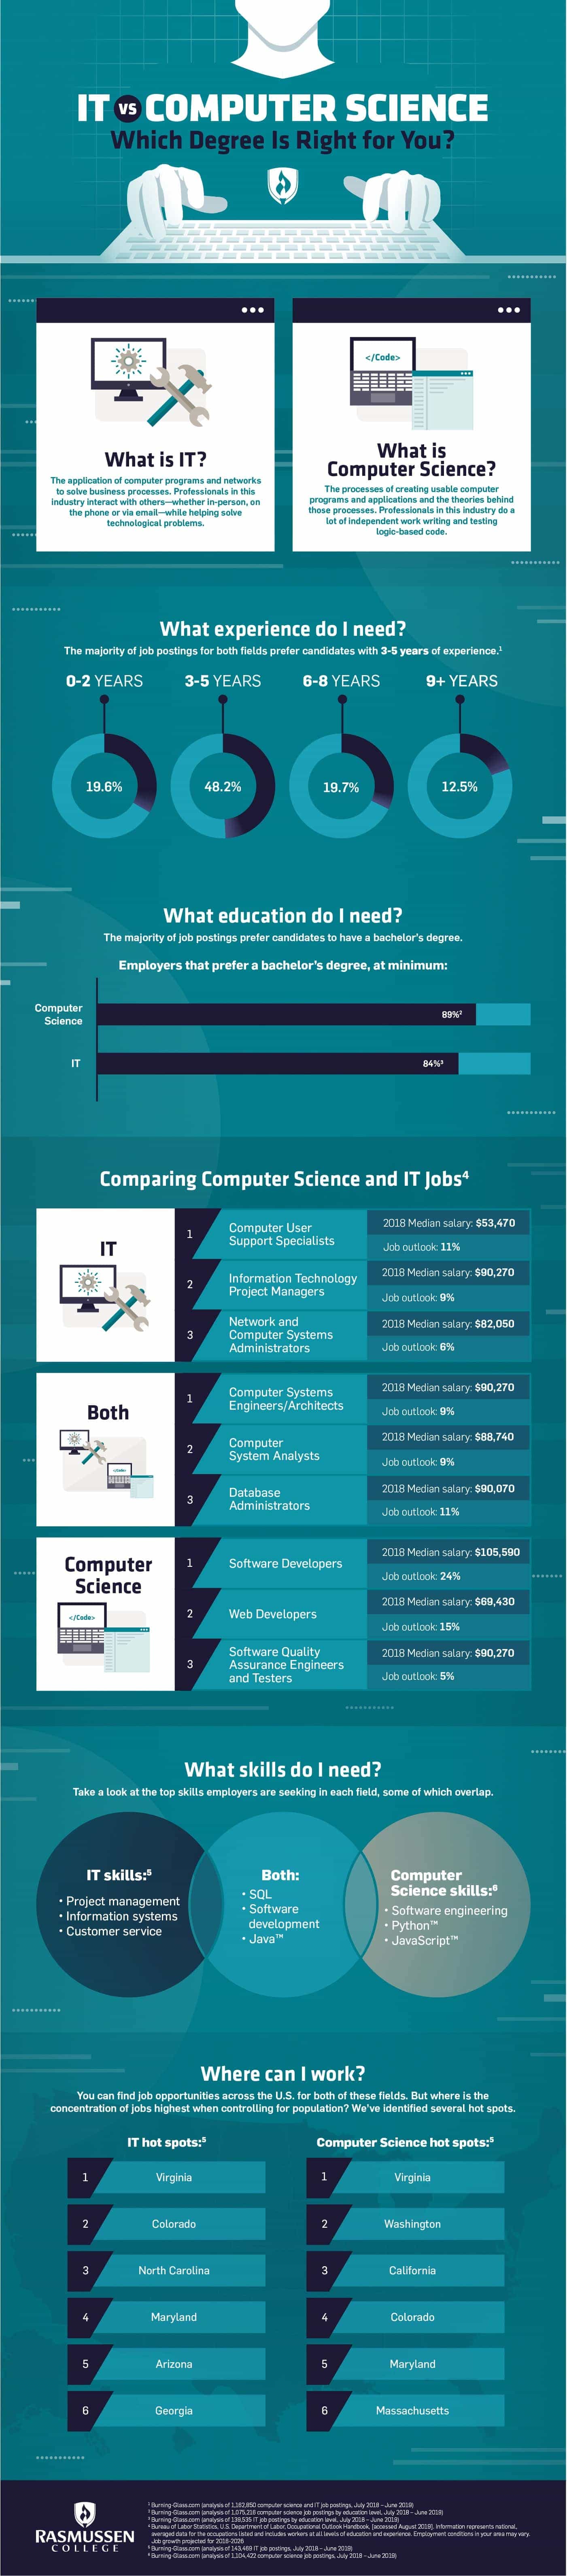 it vs computer science side by side breakdown in infographic